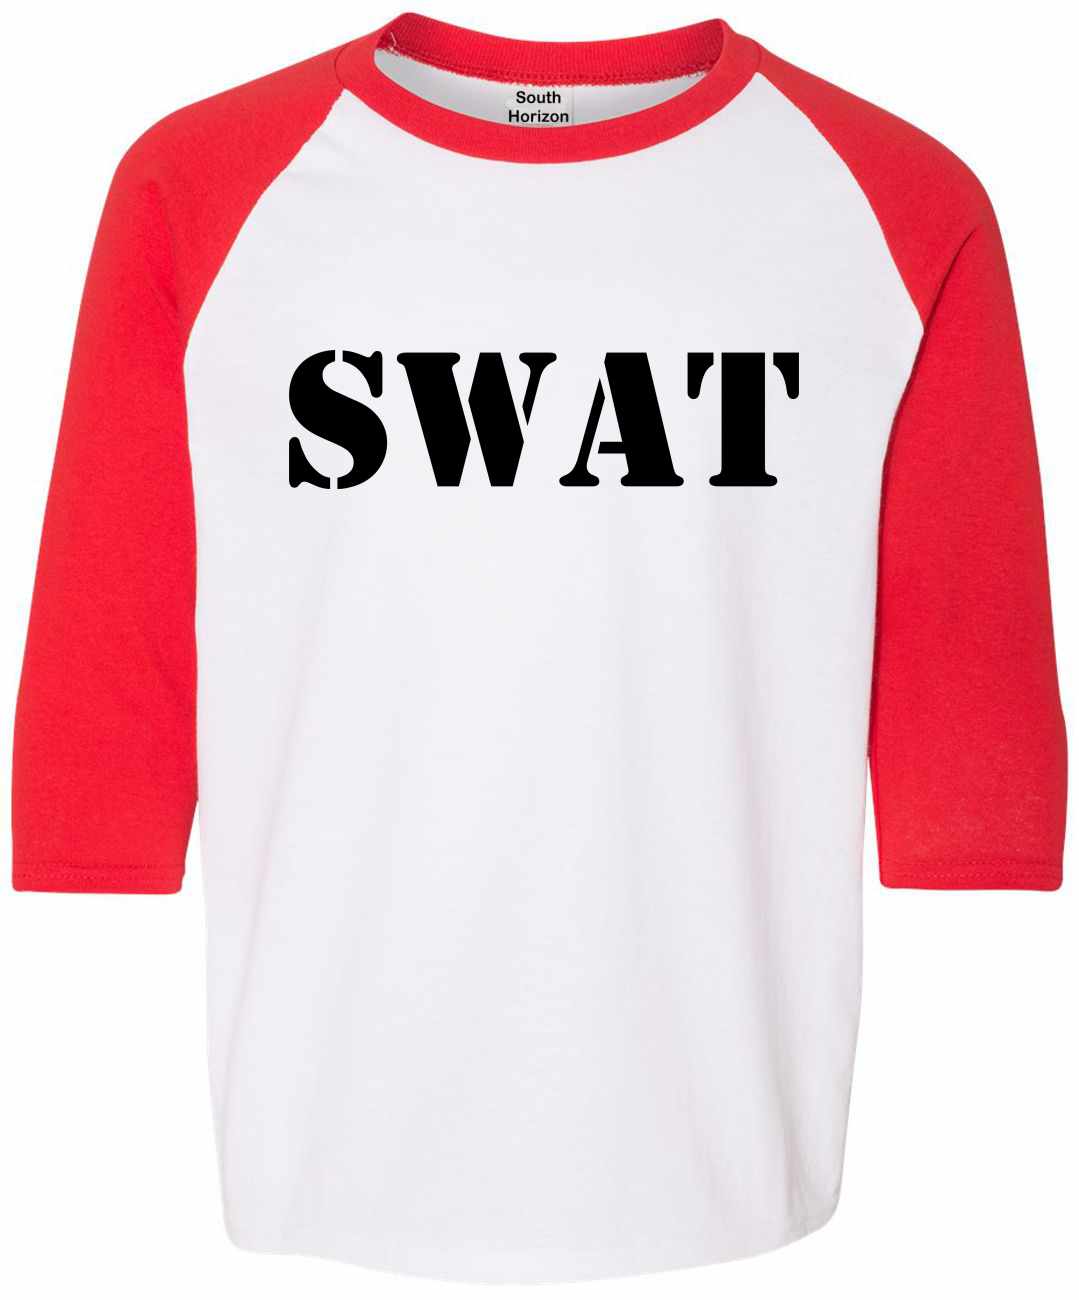 SWAT on Youth Baseball Shirt (#247-212)